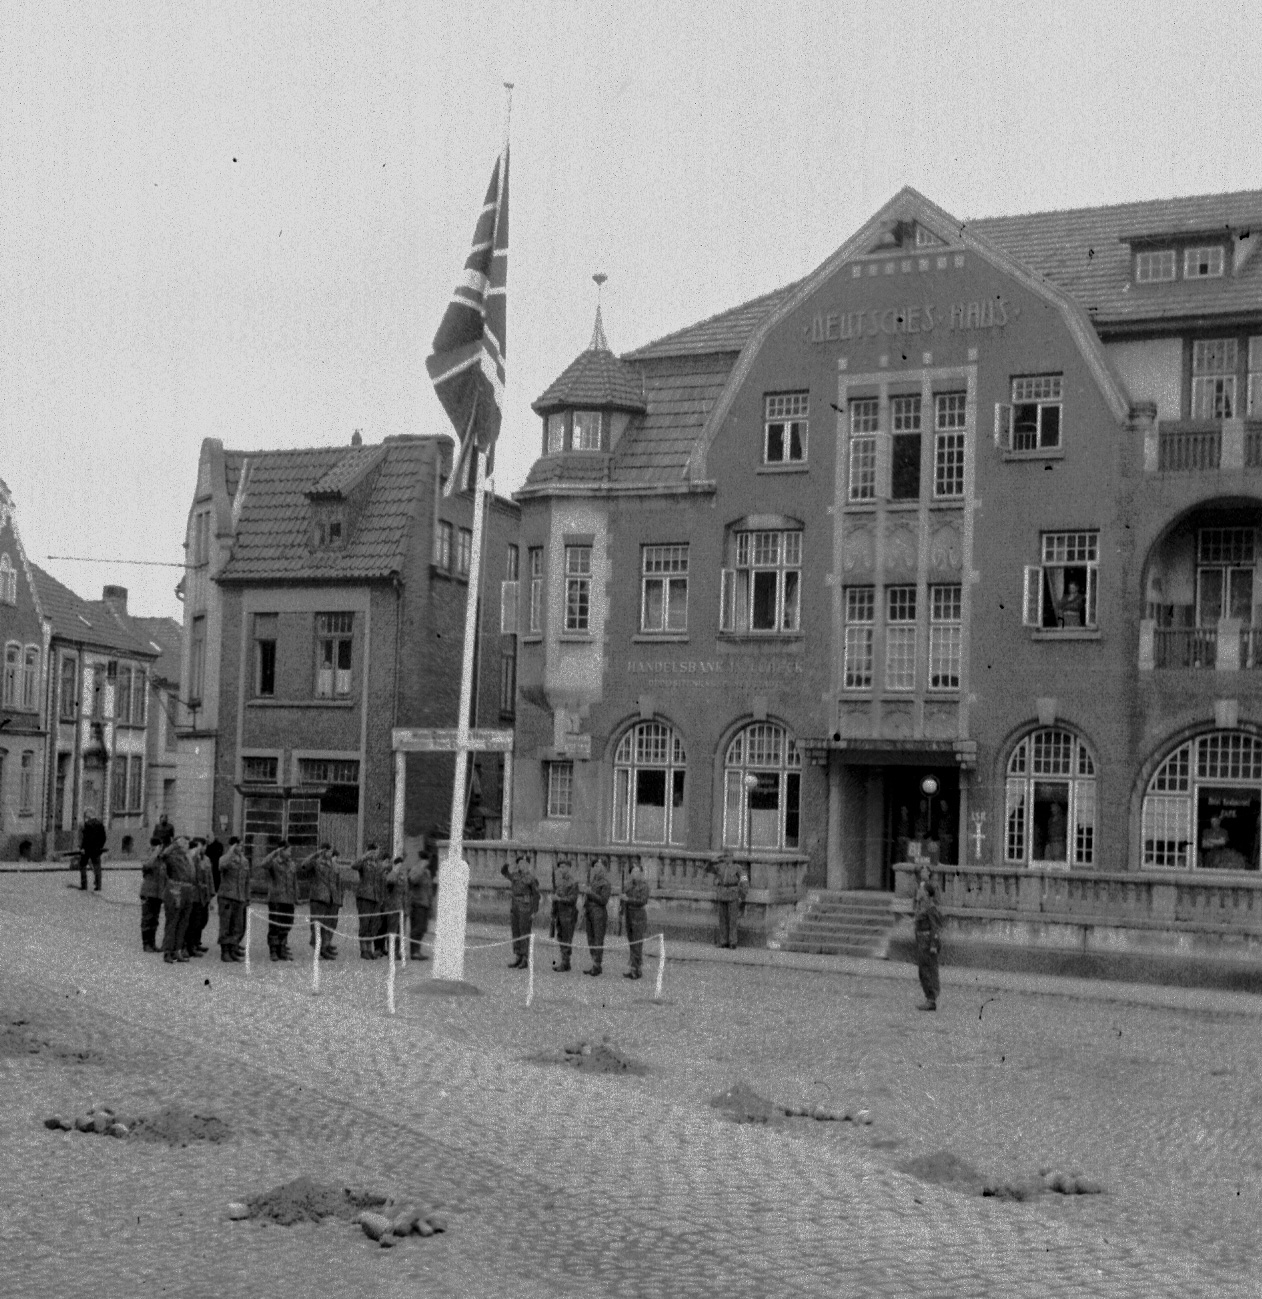 1 Special Service Bde. HQ., Adolf Hitler Platz, Neudstadt, nr Lubeck